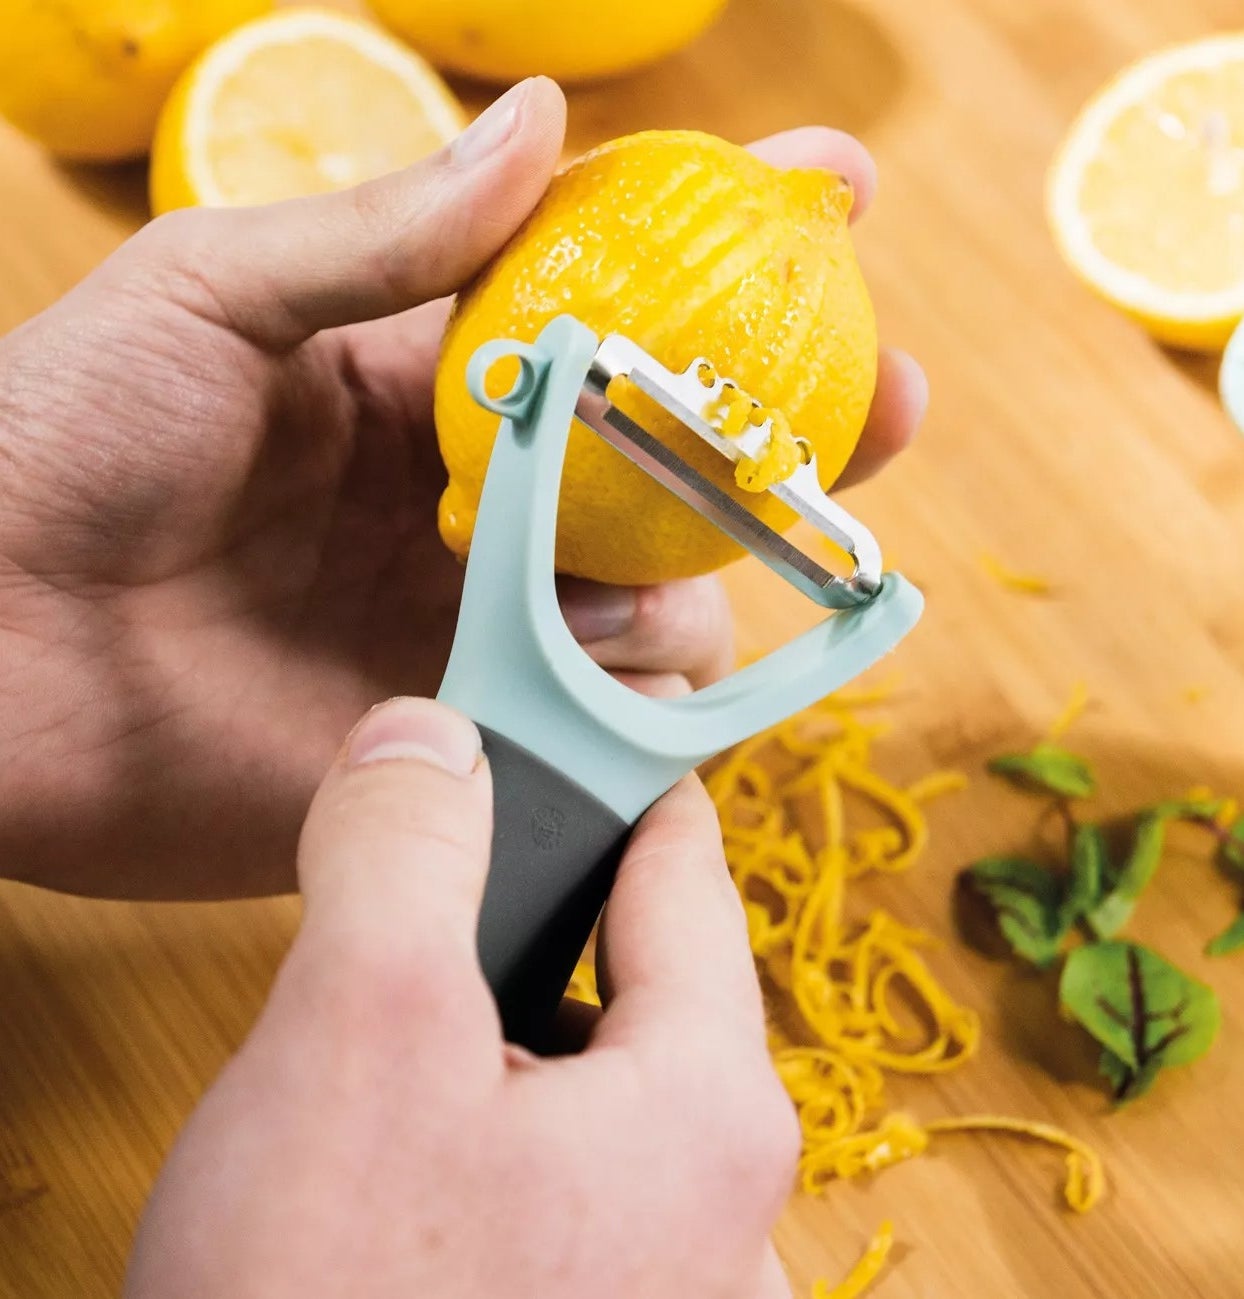 The Y-peeler zesting a lemon